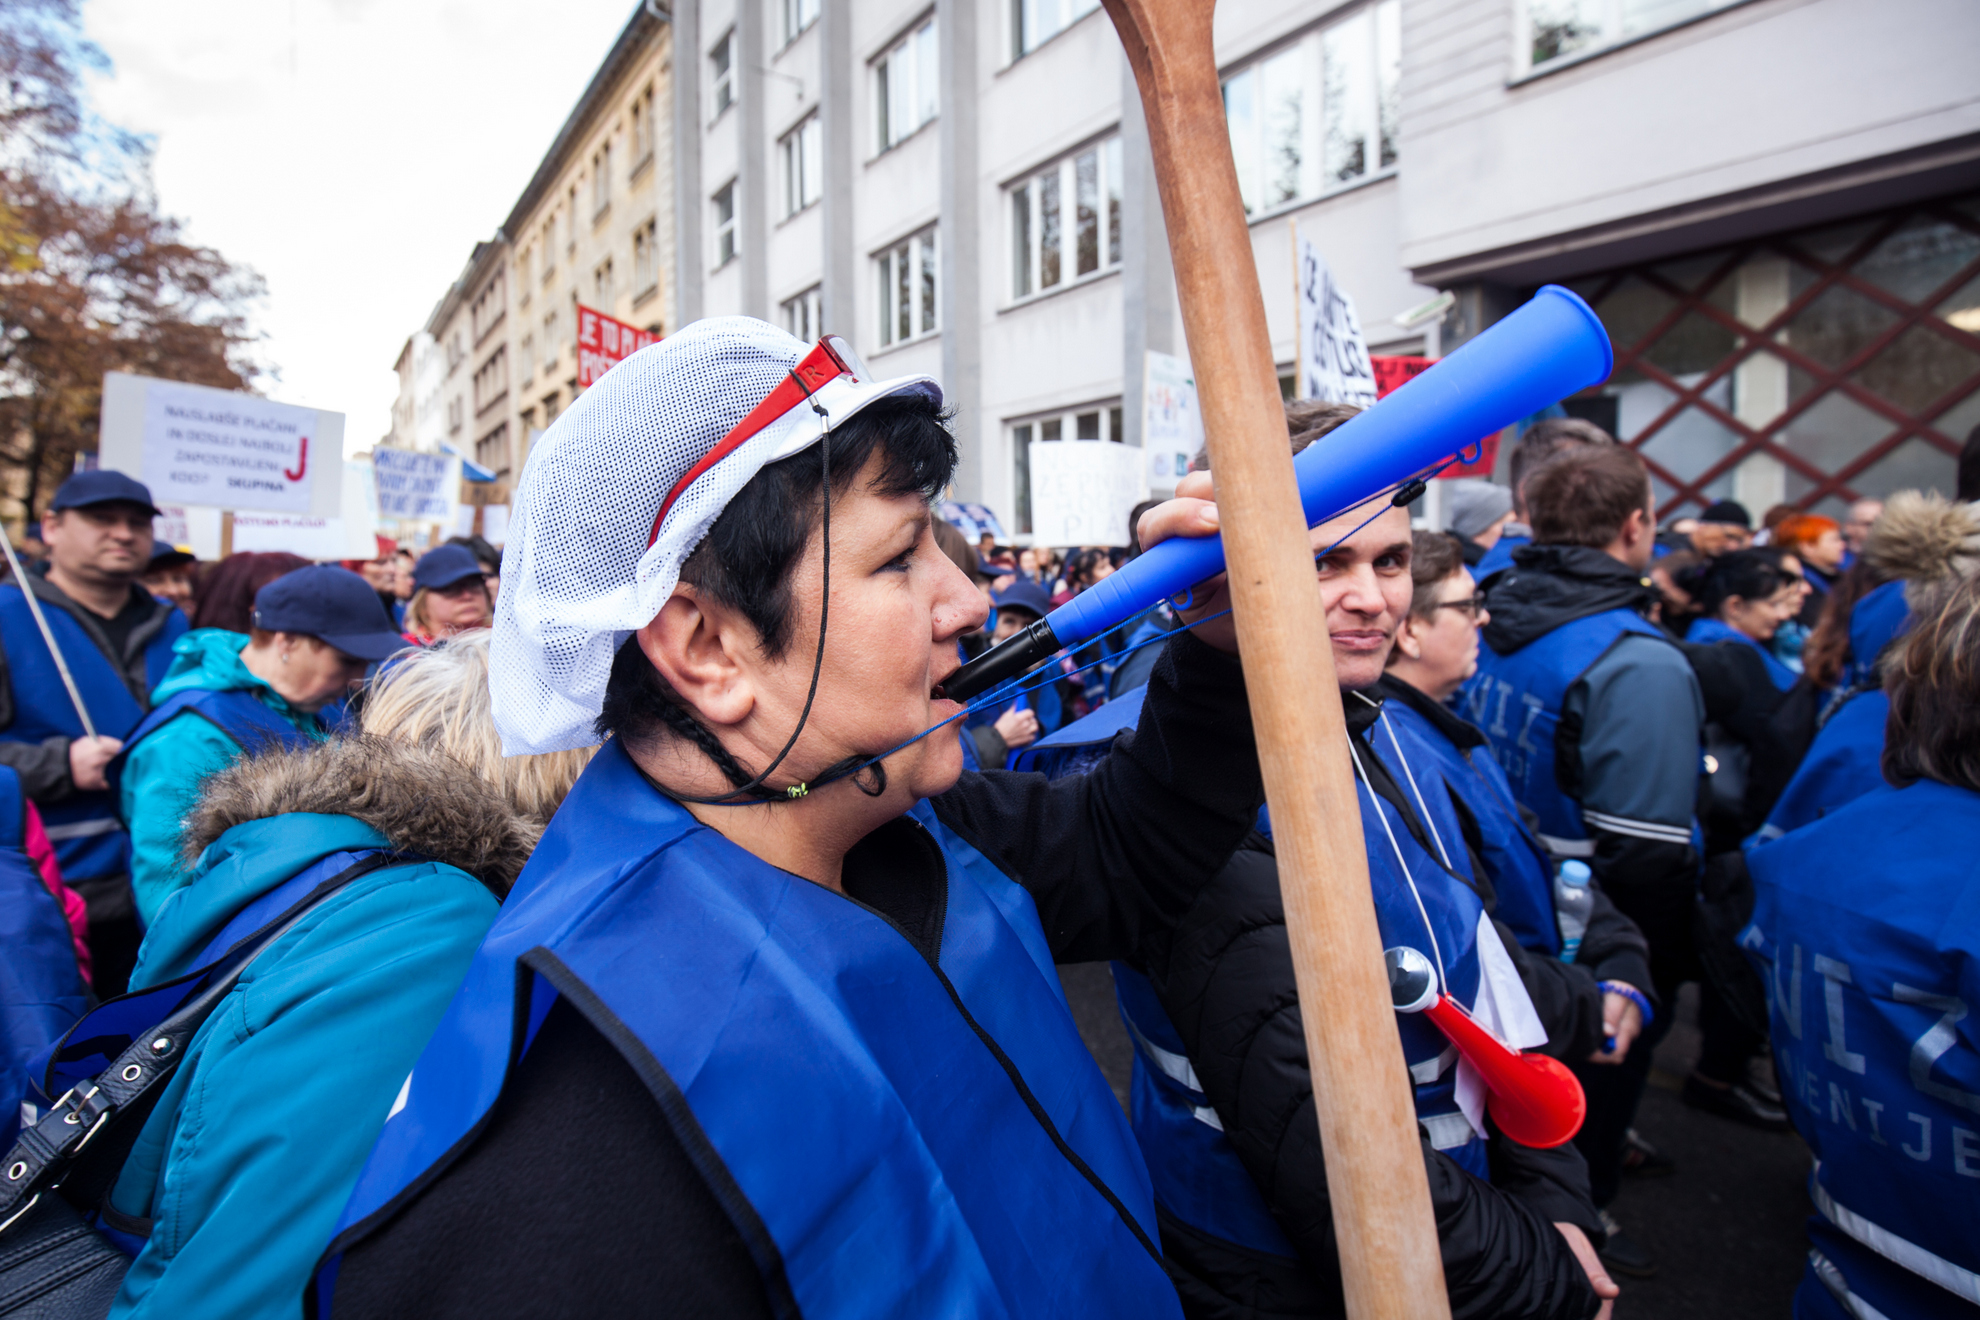 03.11.2016 Ljubljana, Gregorčičeva. Demostracije sindikata skupine J